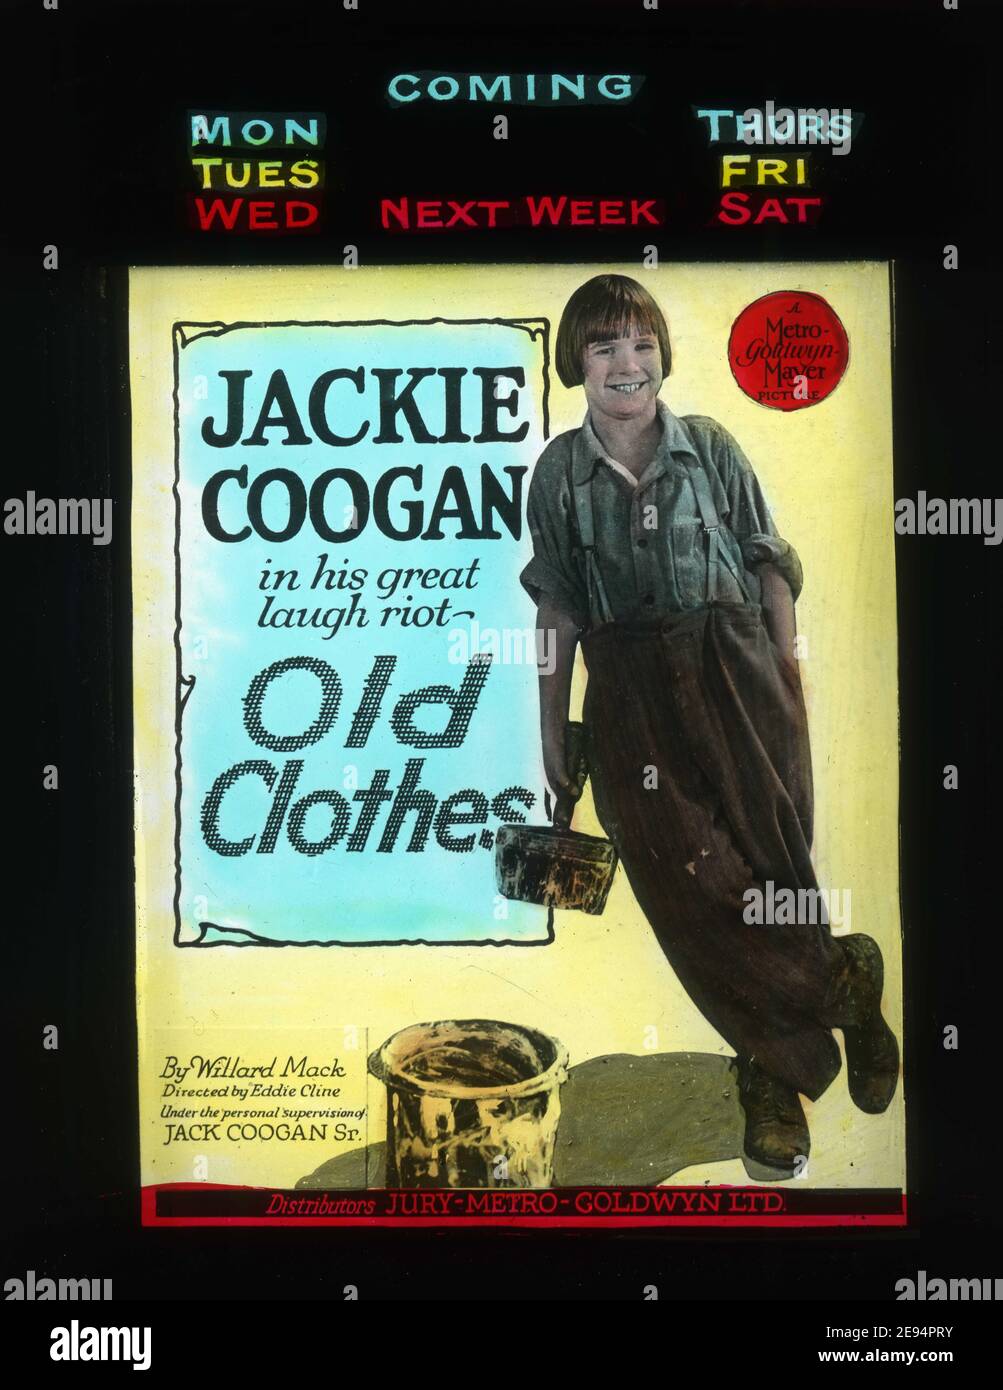 Glasplatte für JACKIE COOGAN in ALTEN KLEIDERN 1925 Regisseur EDWARD F. CLINE Story Willard Mack Jackie Coogan Productions / Metro Goldwyn Mayer (US) / Jury Metro-Goldwyn (UK) Stockfoto